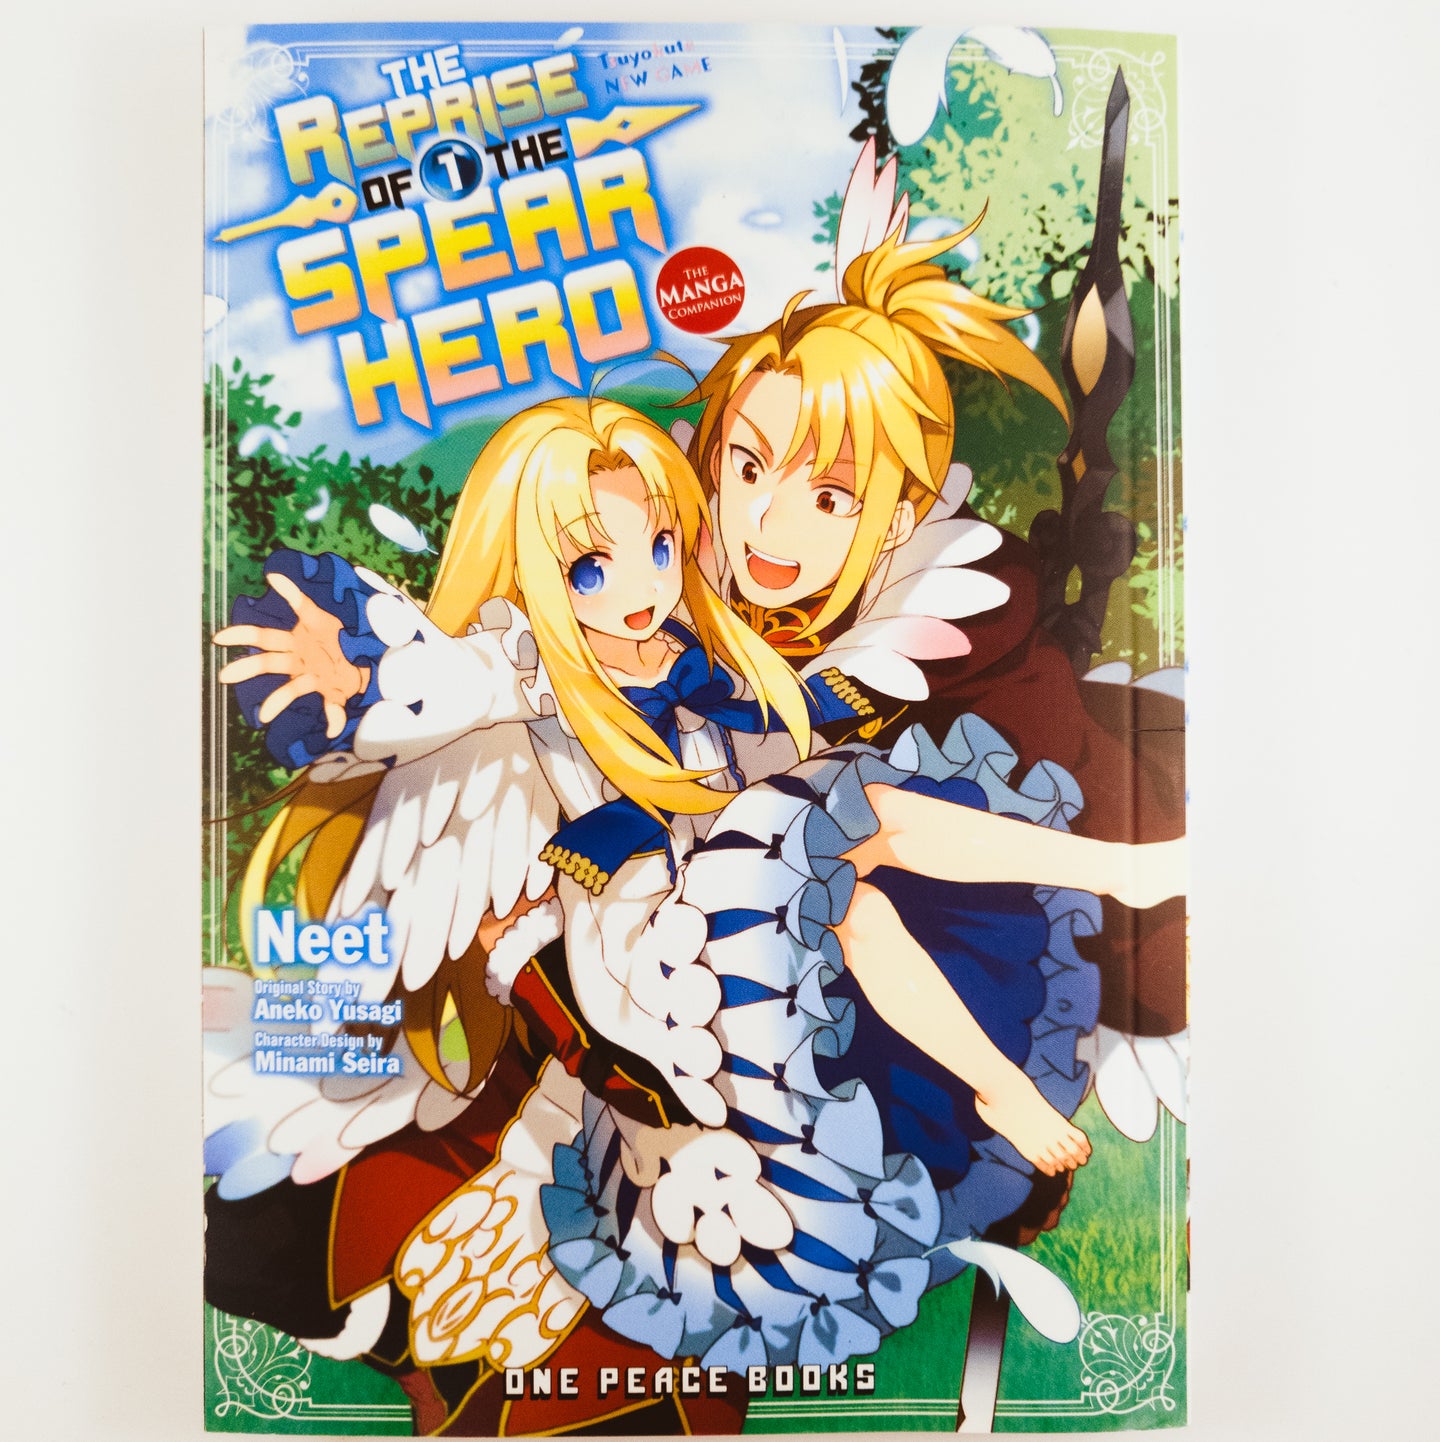 The Reprise of the Spear Hero Volume 1. Manga by Neet, Aneko Yusagi and Minami Seira.